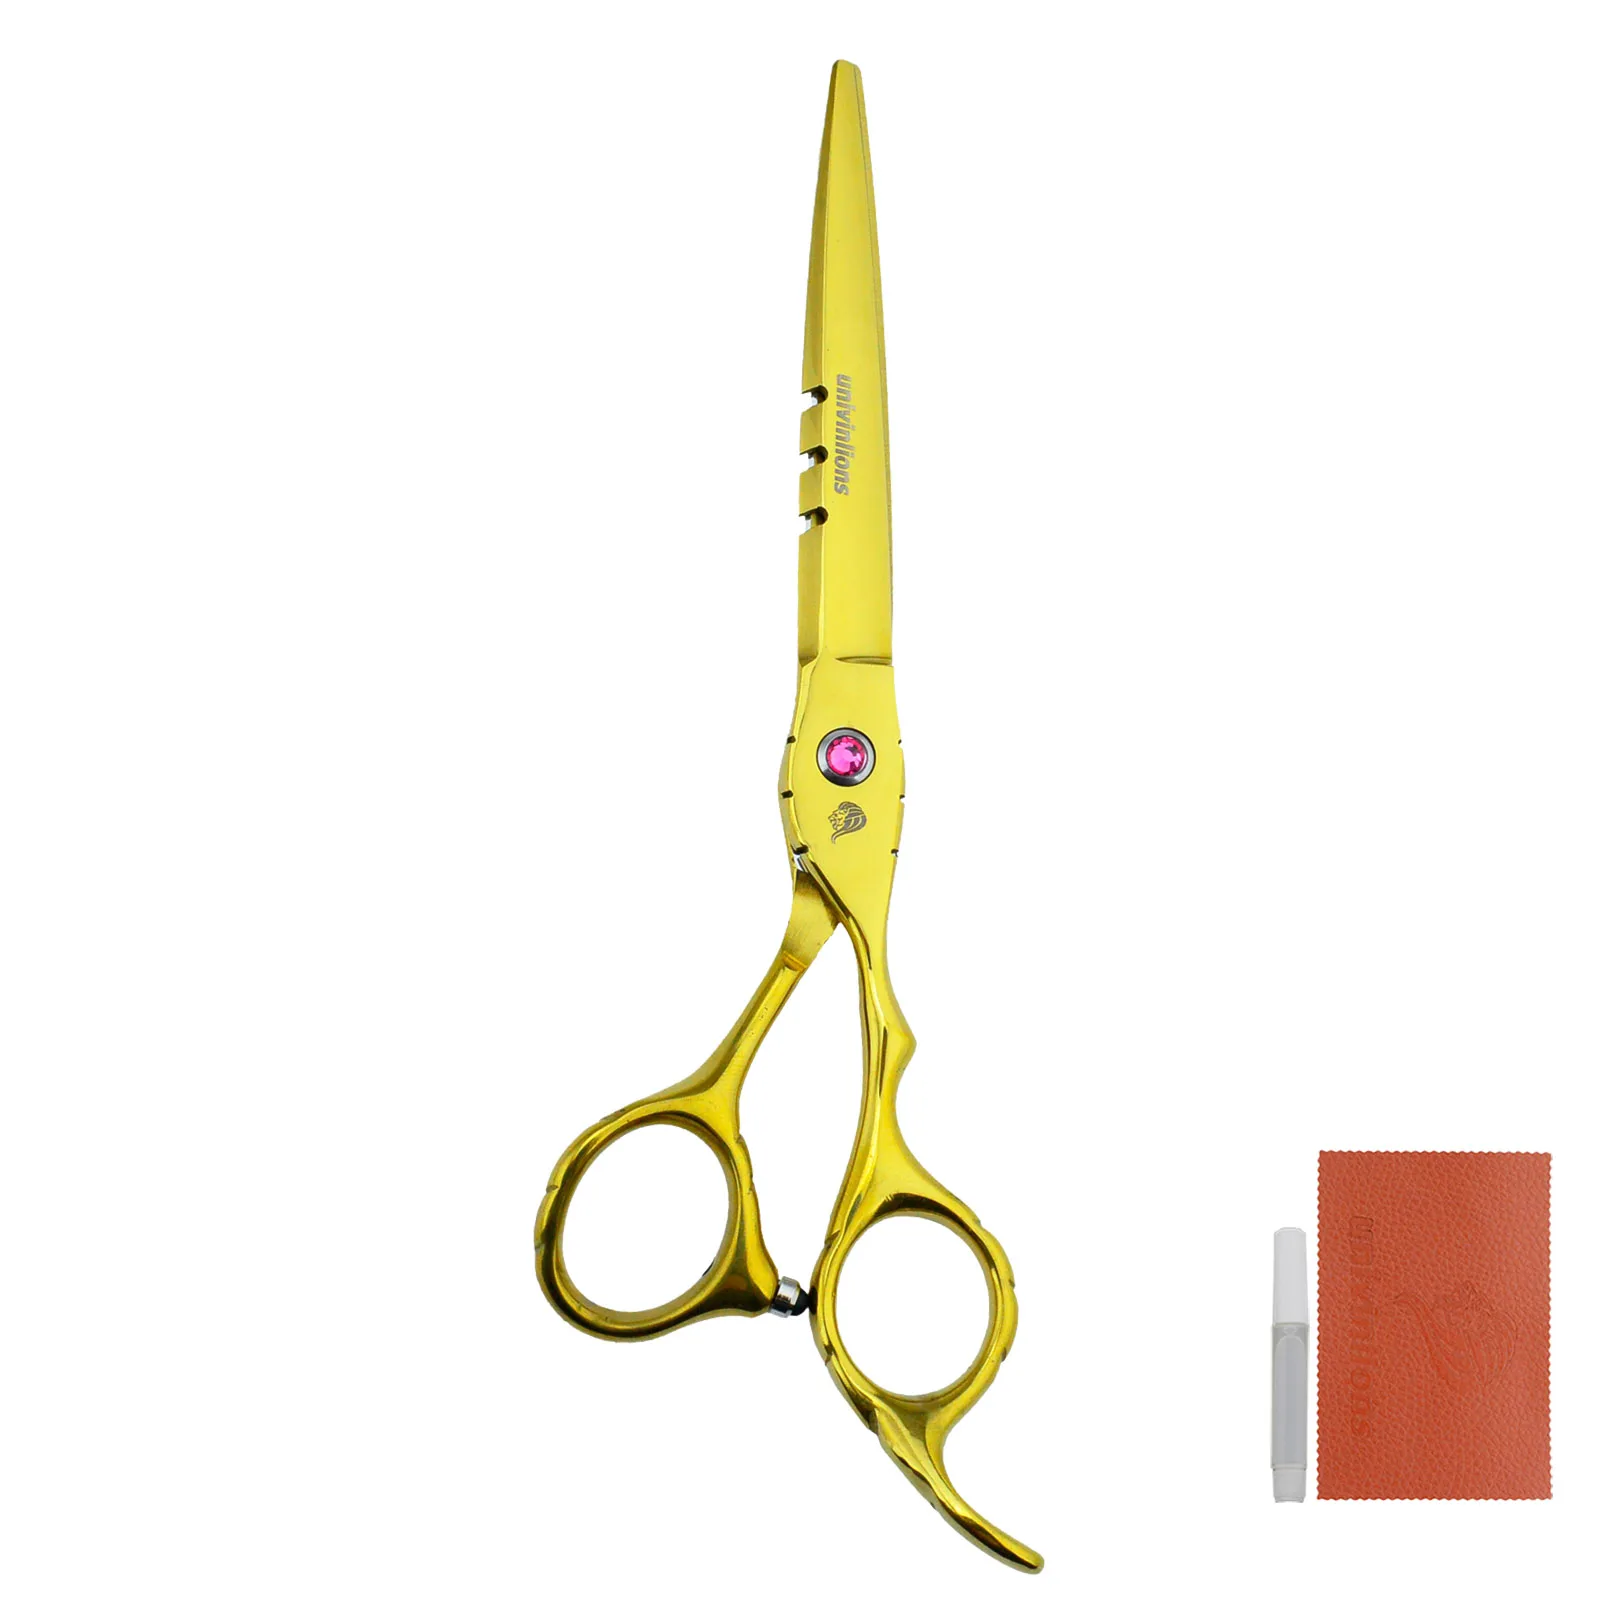 Hair Cutting Scissors, Portable Hair Shears Adjustable Tension Stainless  Steel Scissors to Cut Hair Multifunctional Barber Scissors Ergonomic Design